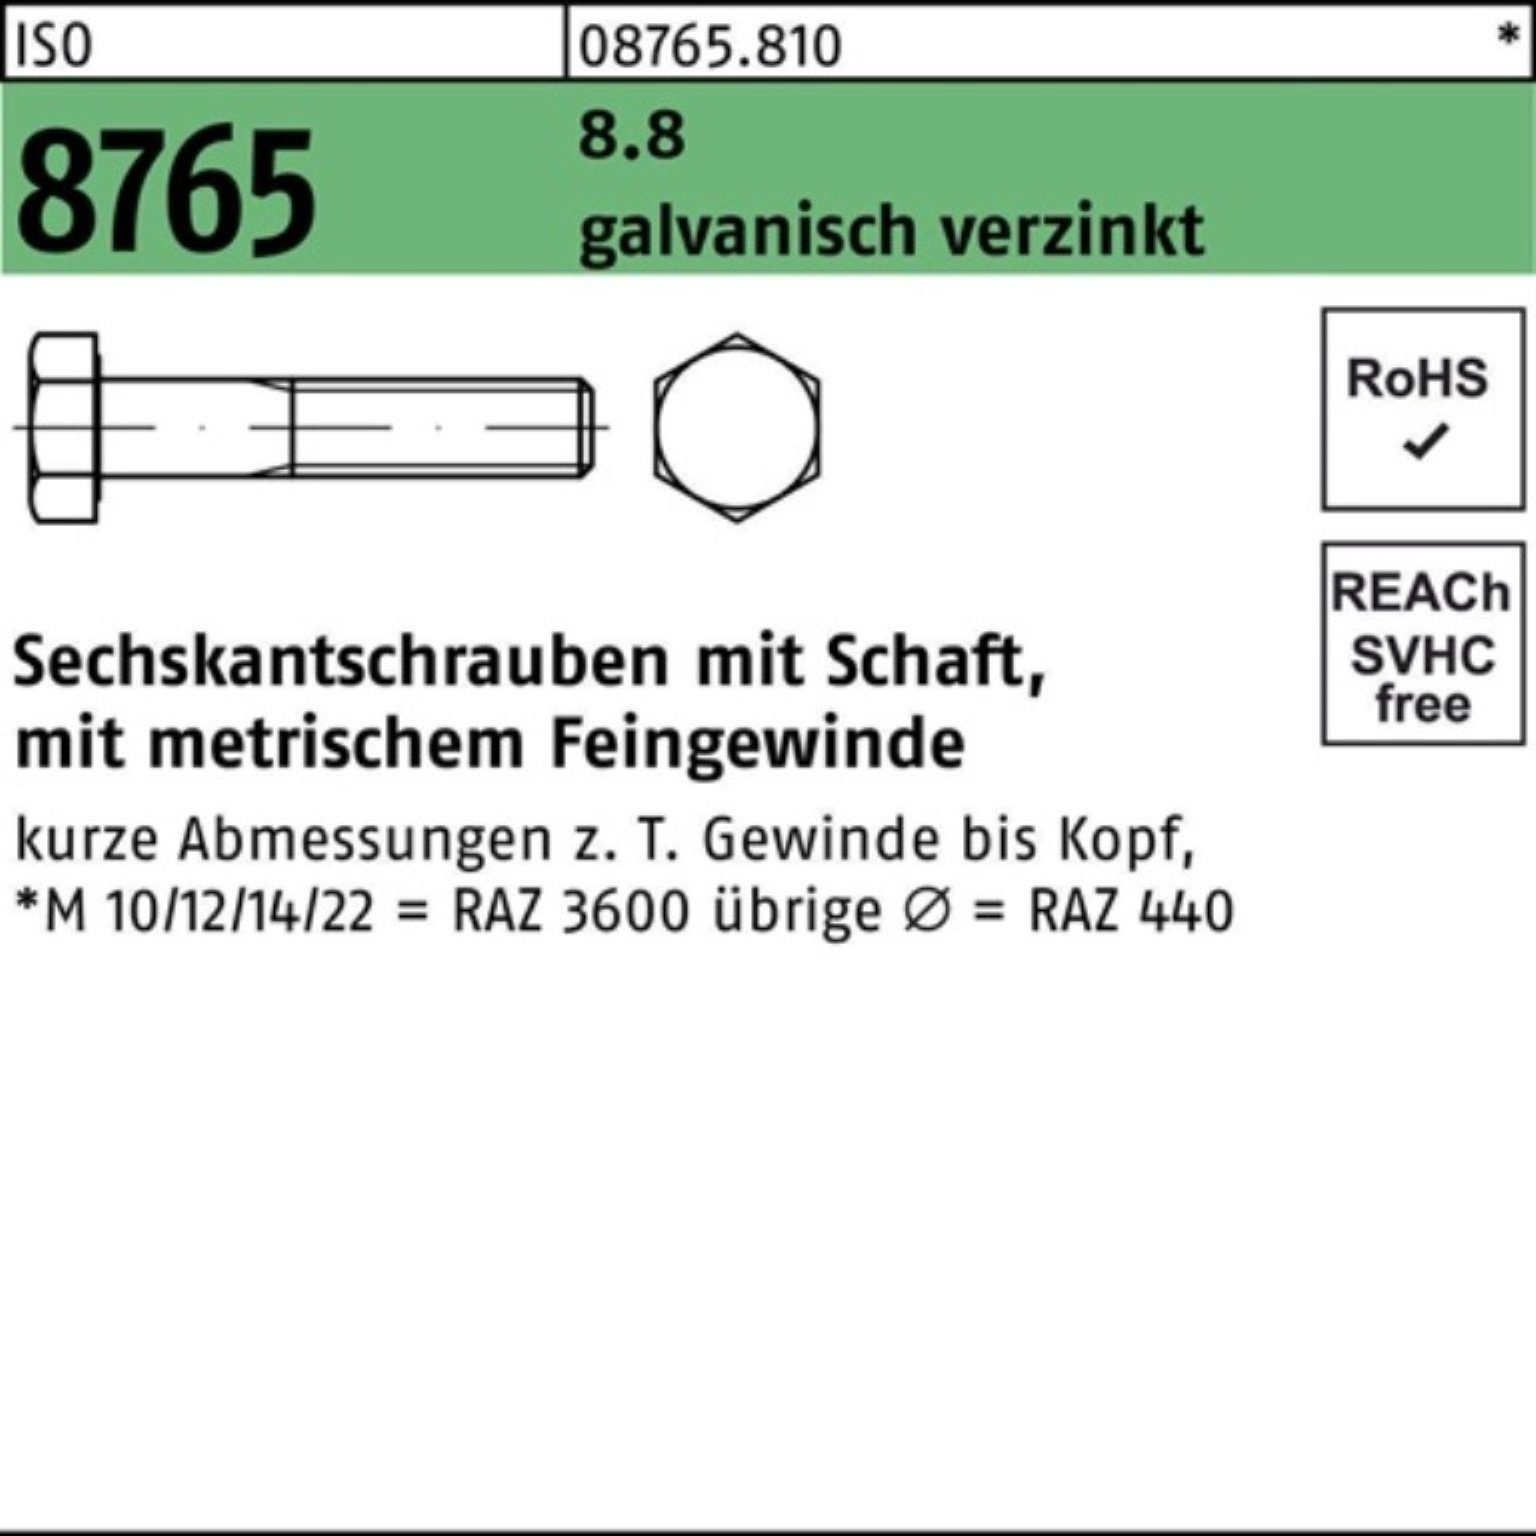 ISO Reyher Pack Sechskantschraube galv.verz M20x1,5x180 8765 8.8 Schaft 100er Sechskantschraube